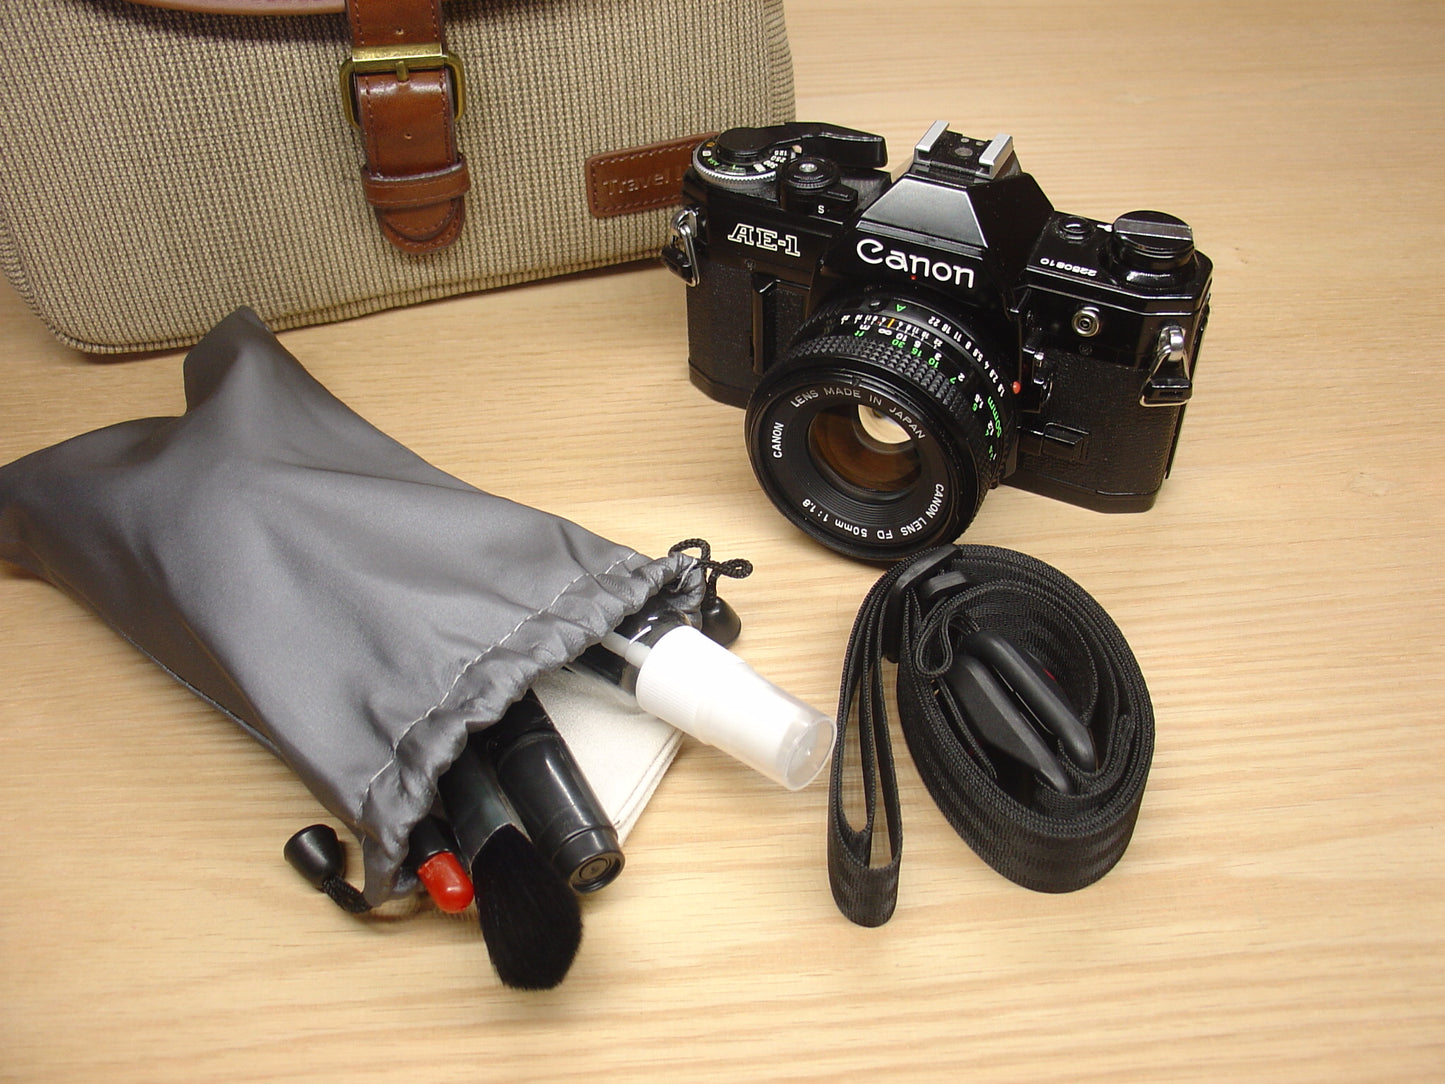 Canon AE-1 SLR camera kit